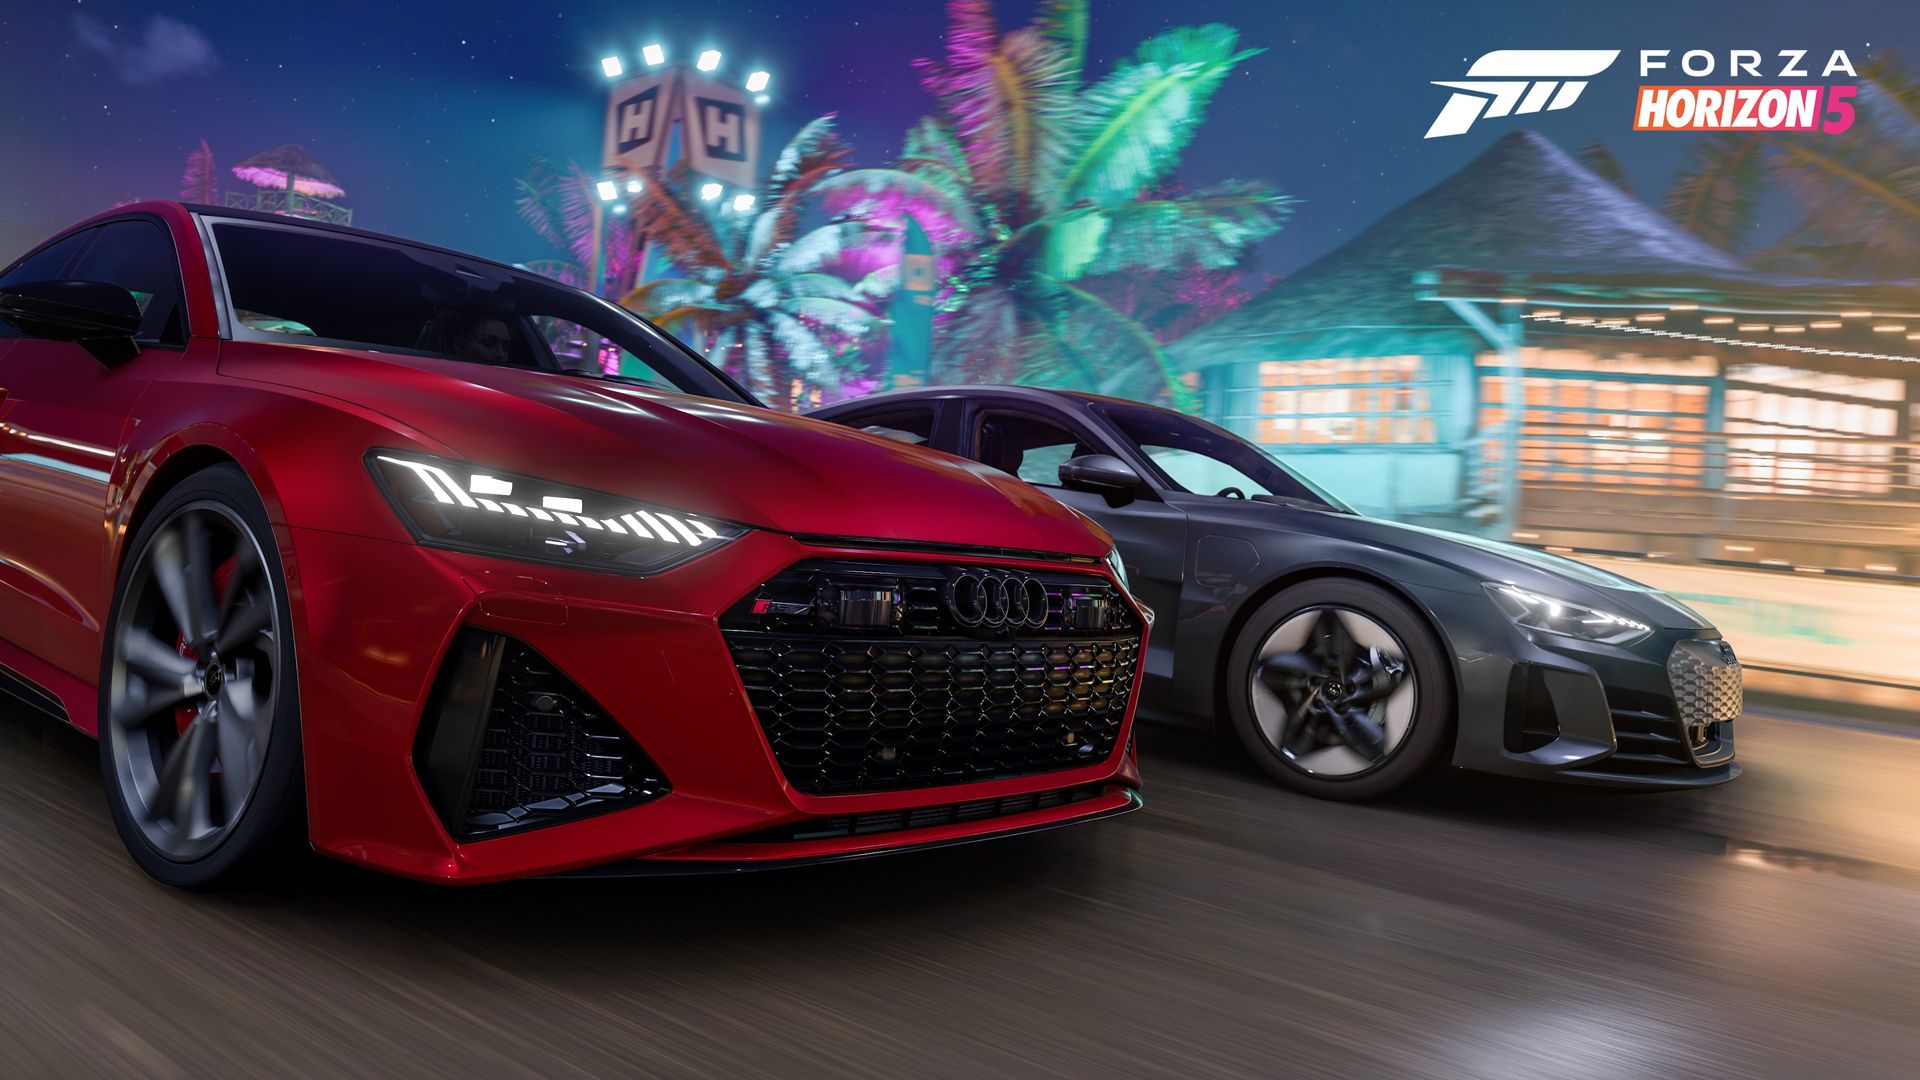 Forza Horizon 5 Series 12 to bring five new cars, body kits, hearing